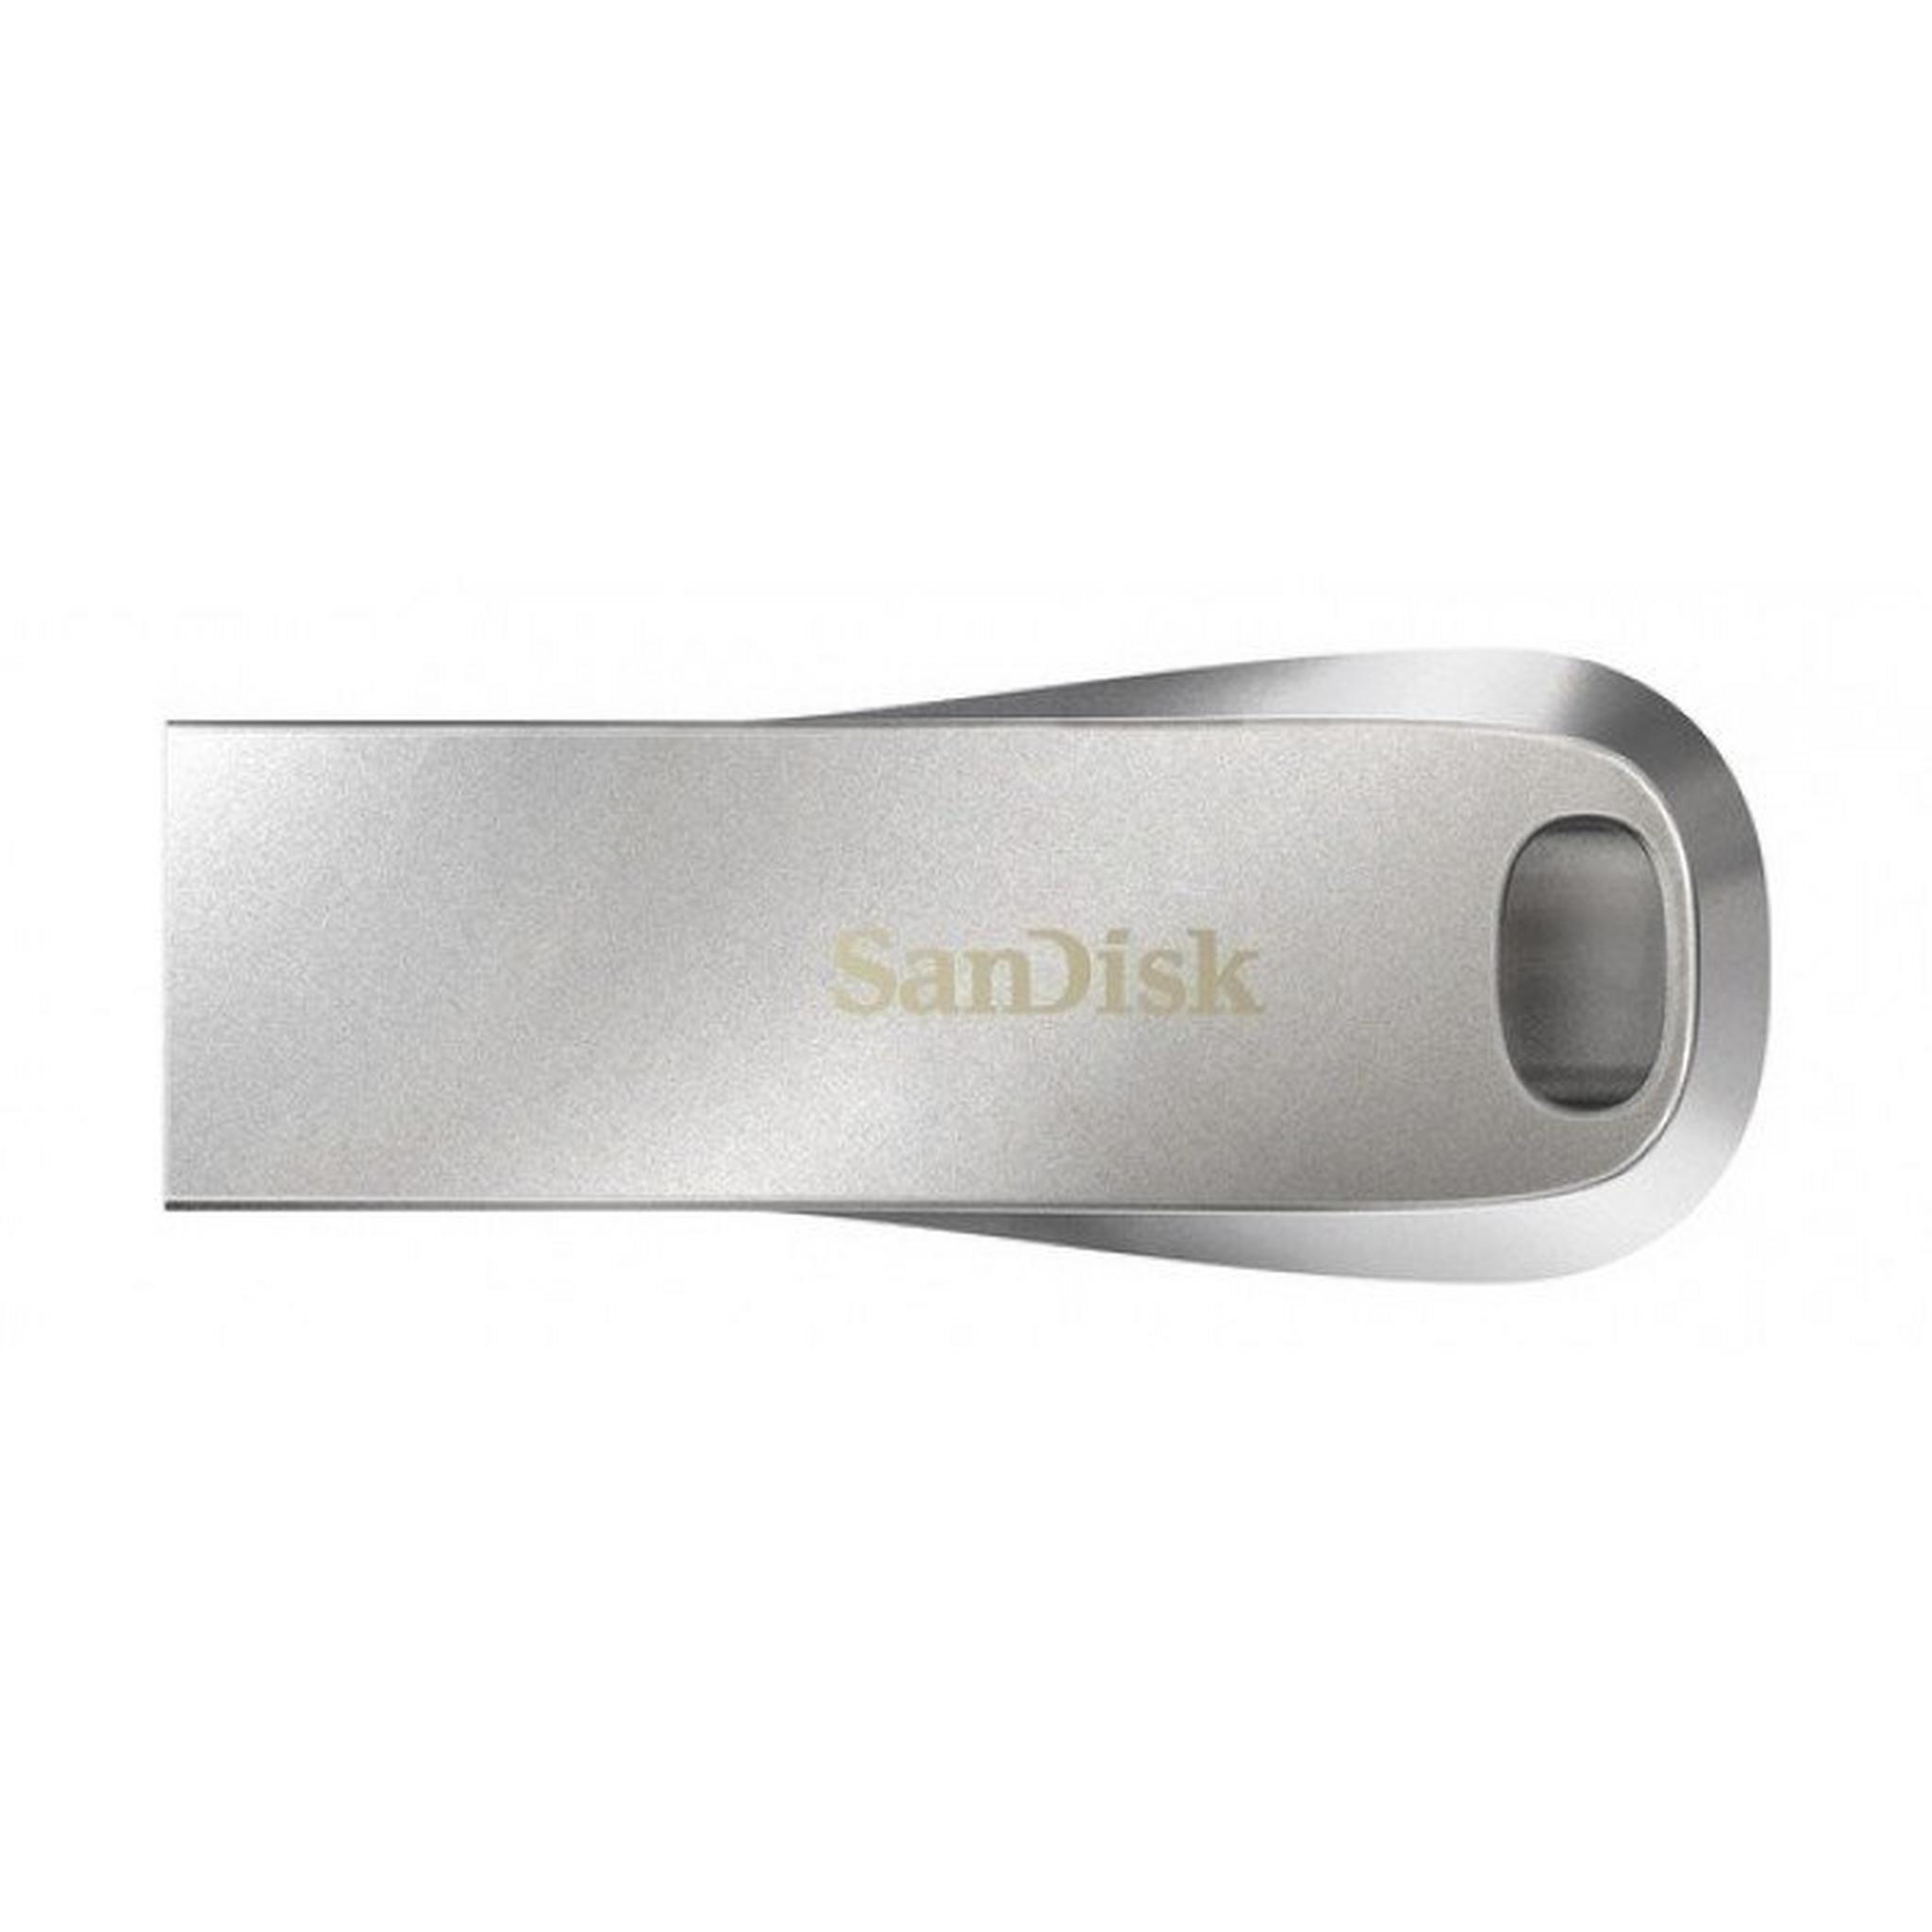 SanDisk 128GB Ultra Luxe USB 3.1 Flash Drive